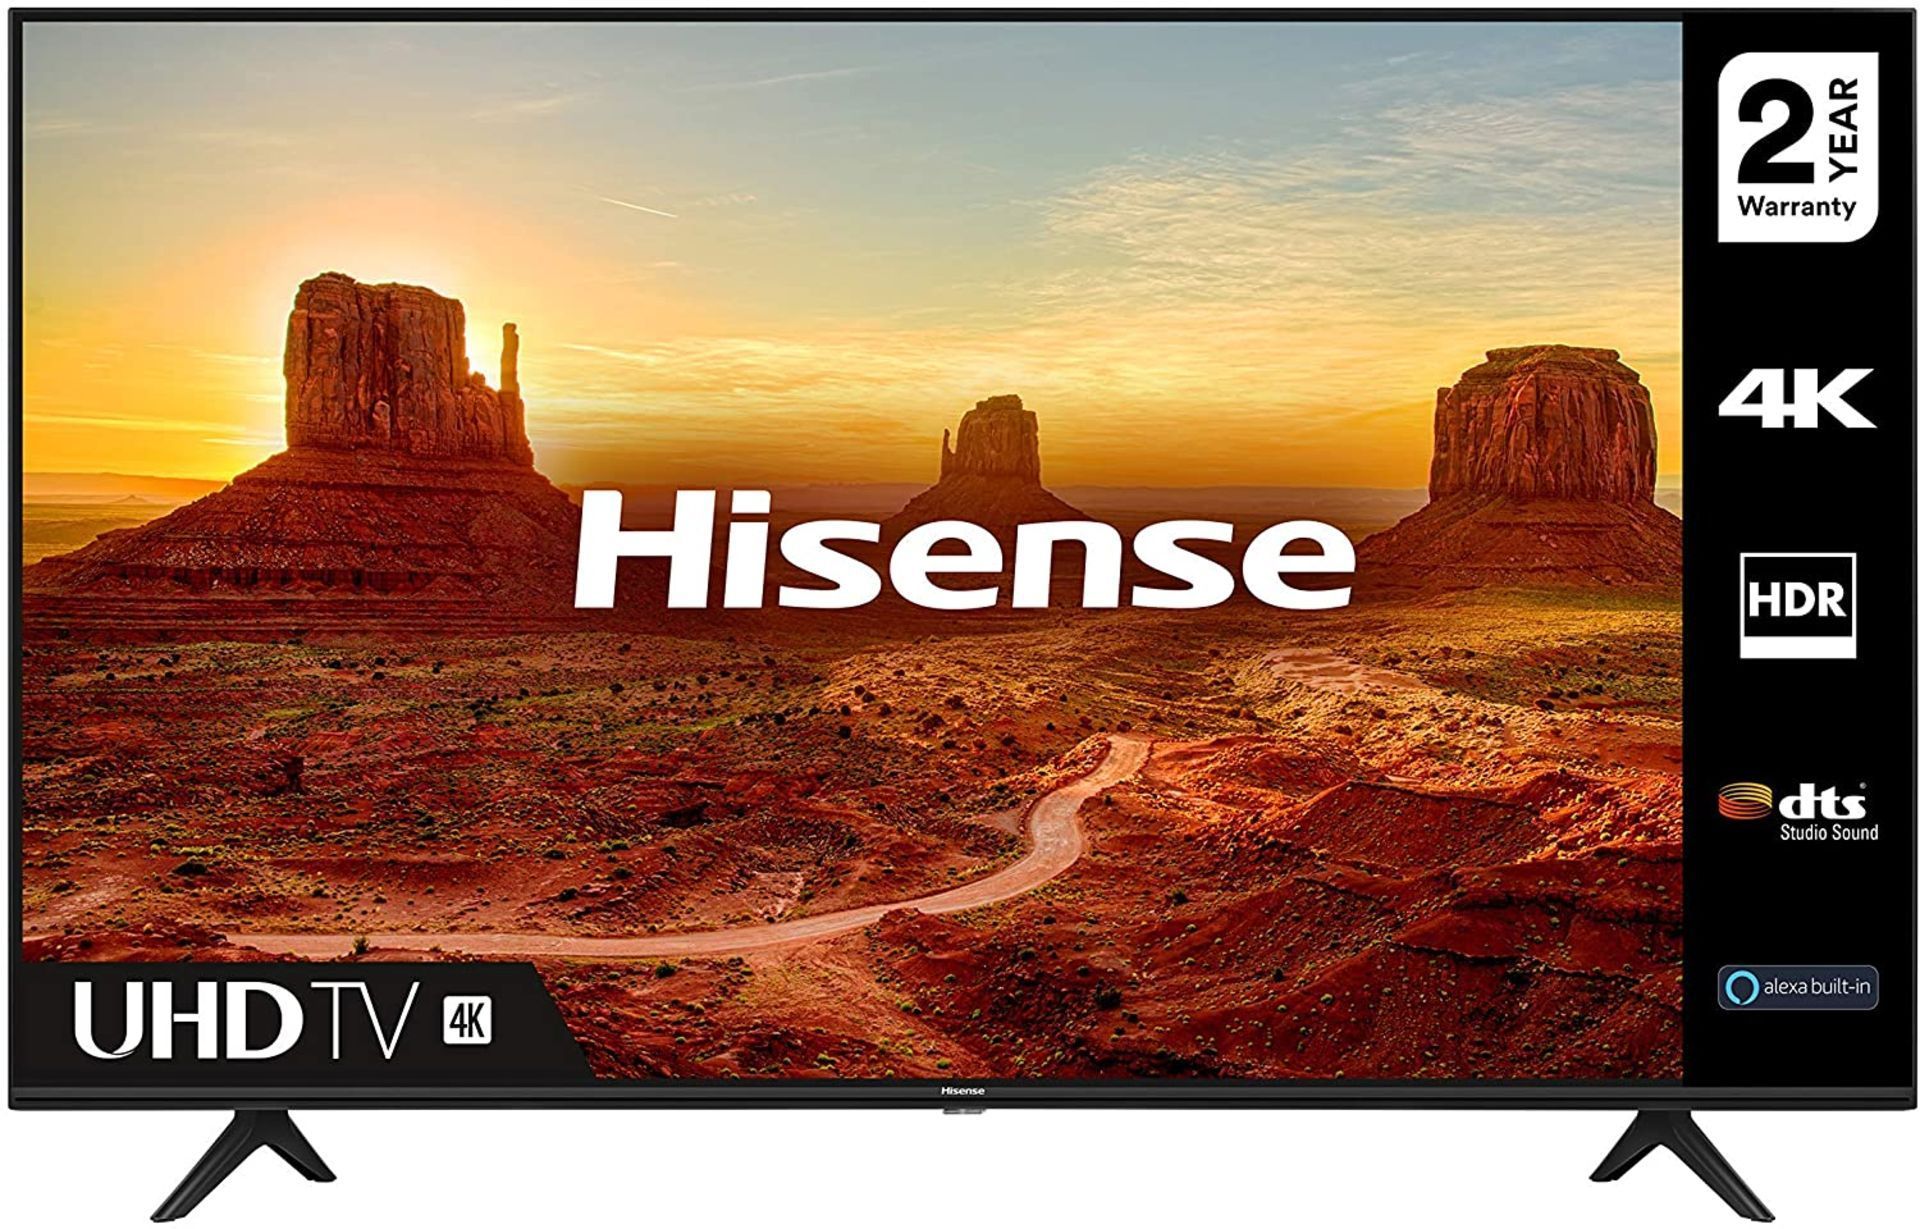 HISENSE VIDAA 43 INCH A6 SERIES UHD SMART TV RRP £399